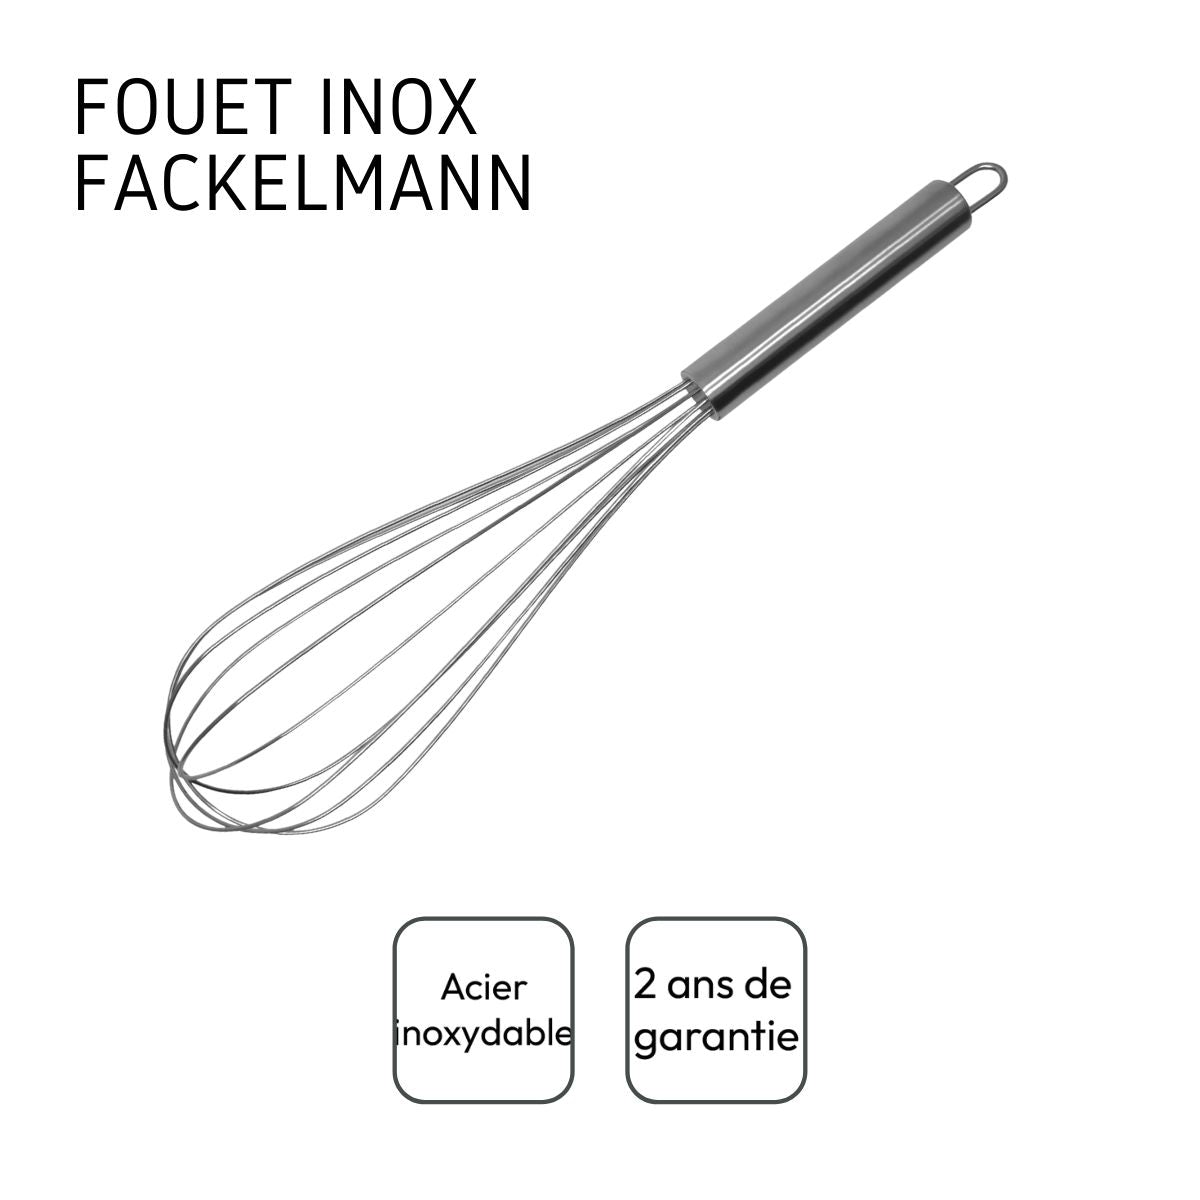 Fouet de cuisine et de pâtisserie en inox 32 cm Elemental Fackelmann 